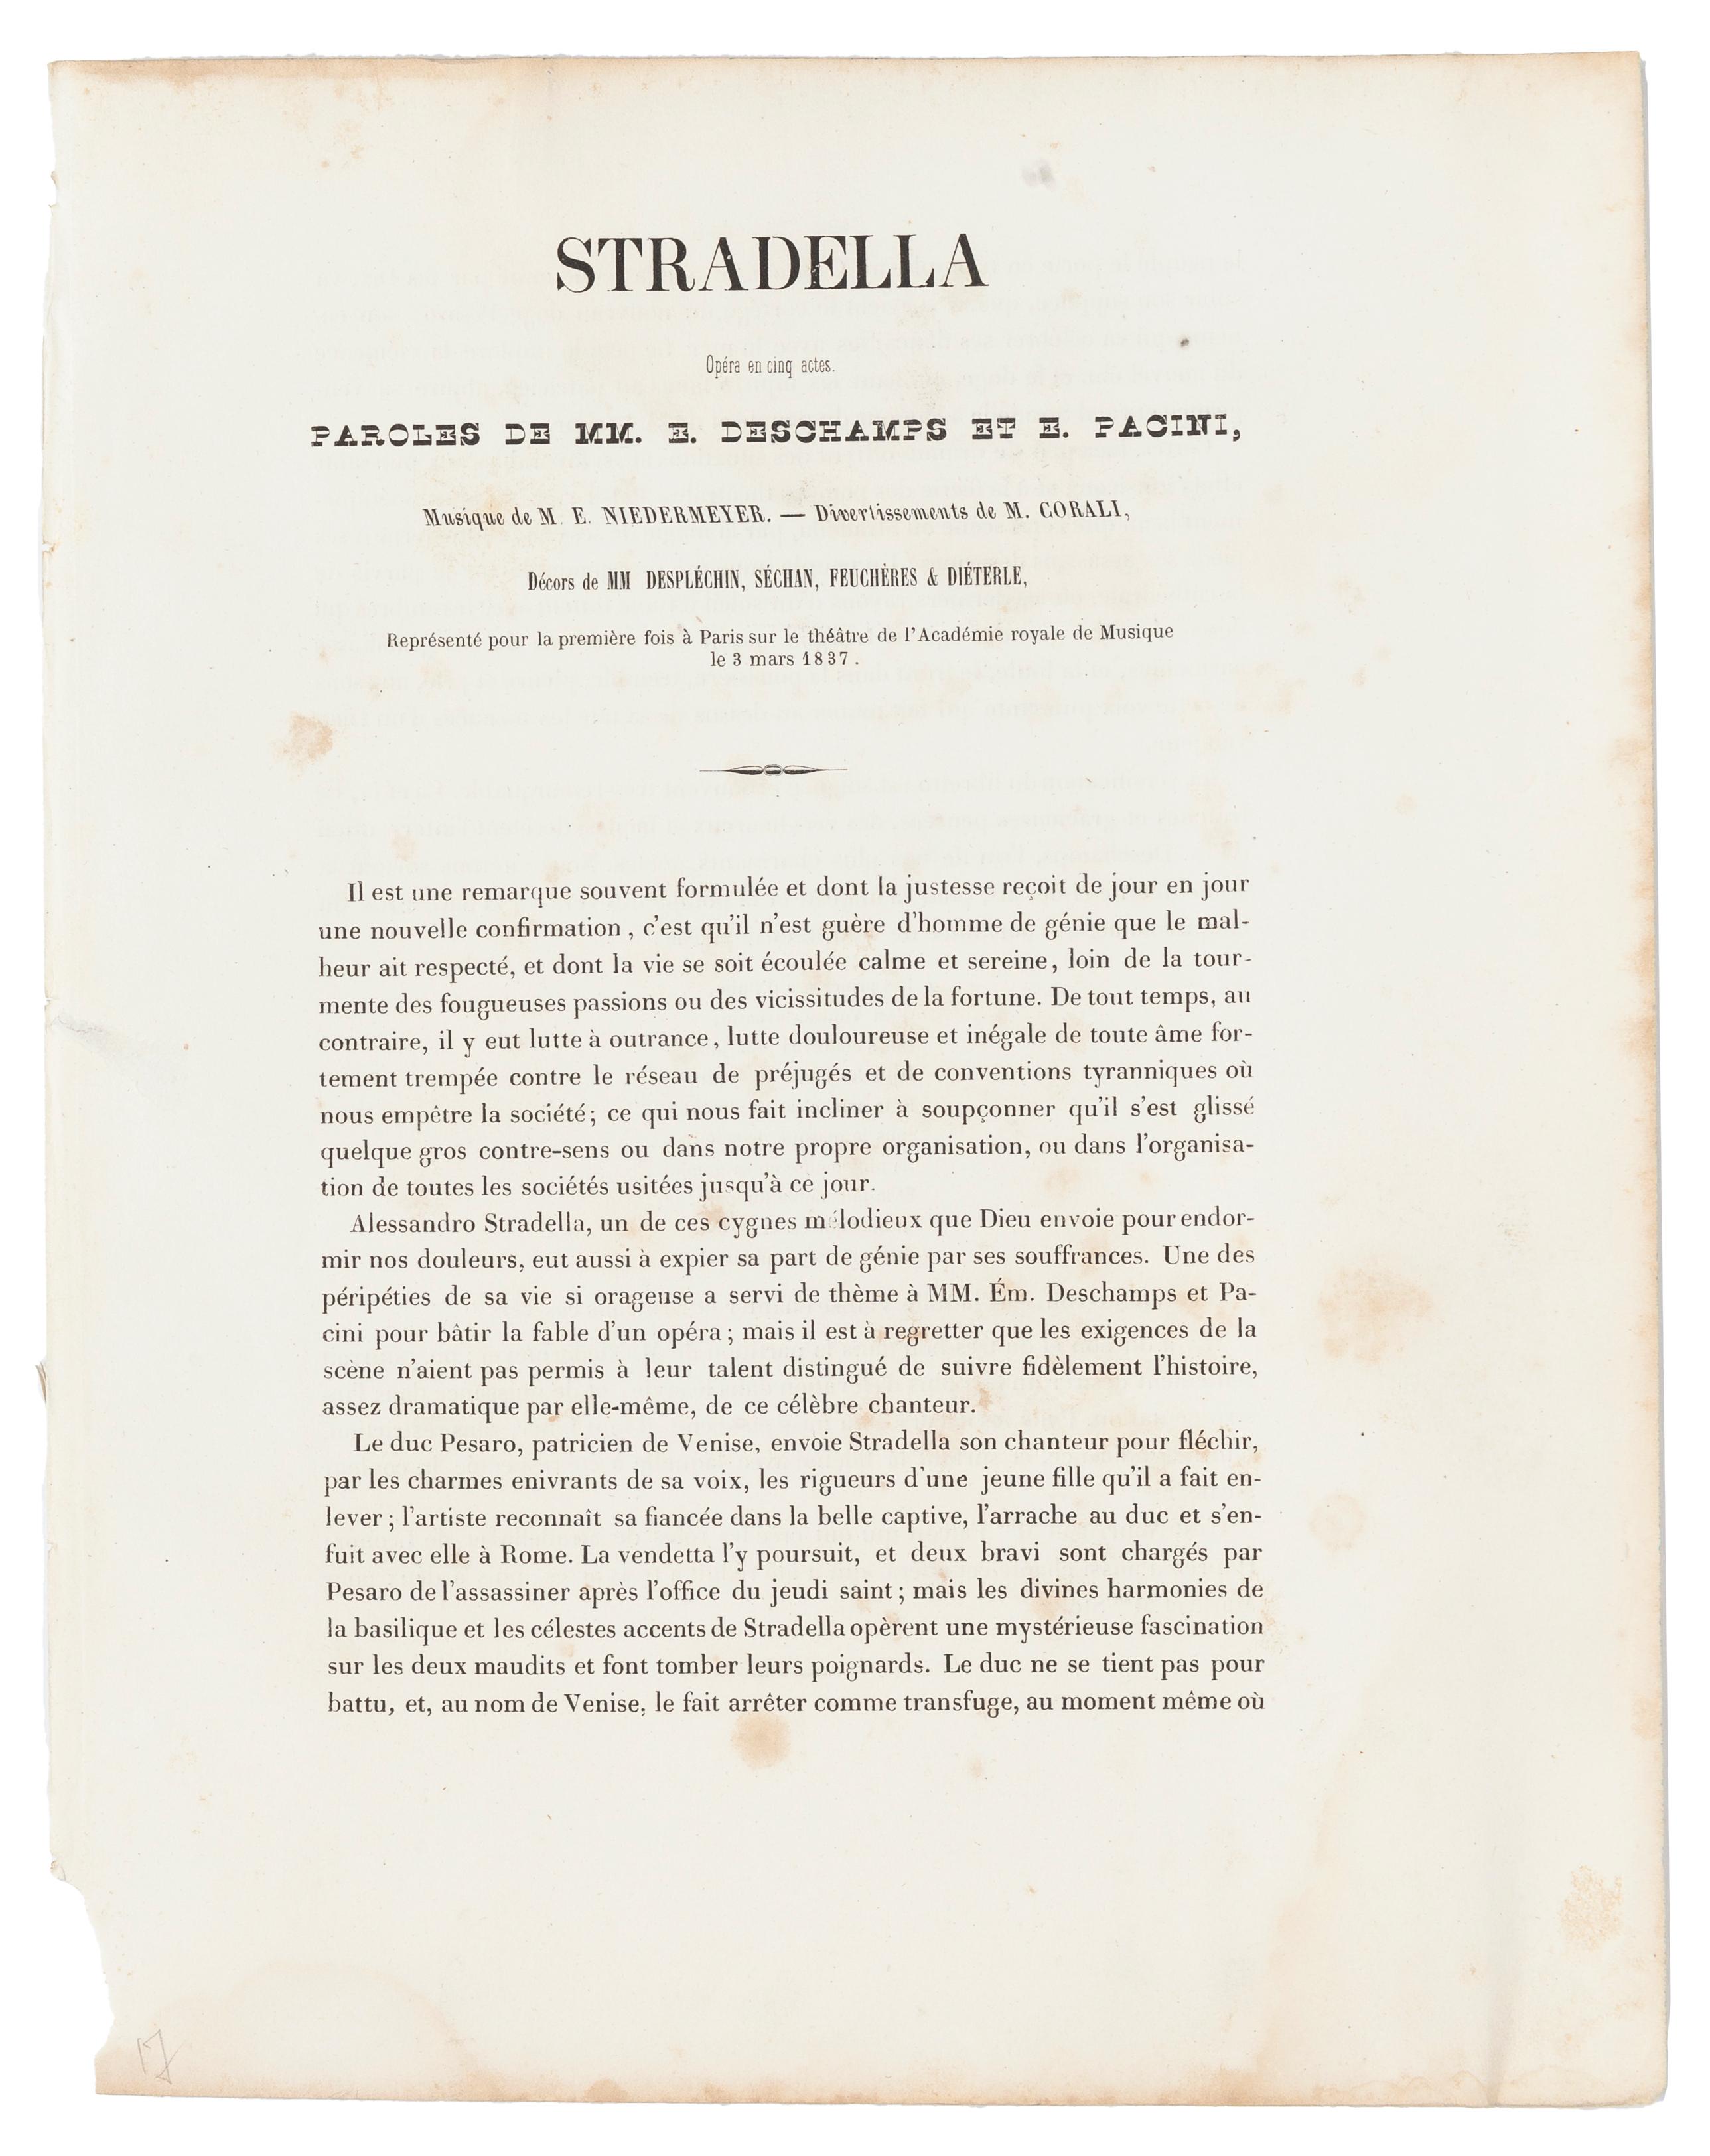 Stradella - Lithograph - 1838 - Print by Charles Deshays